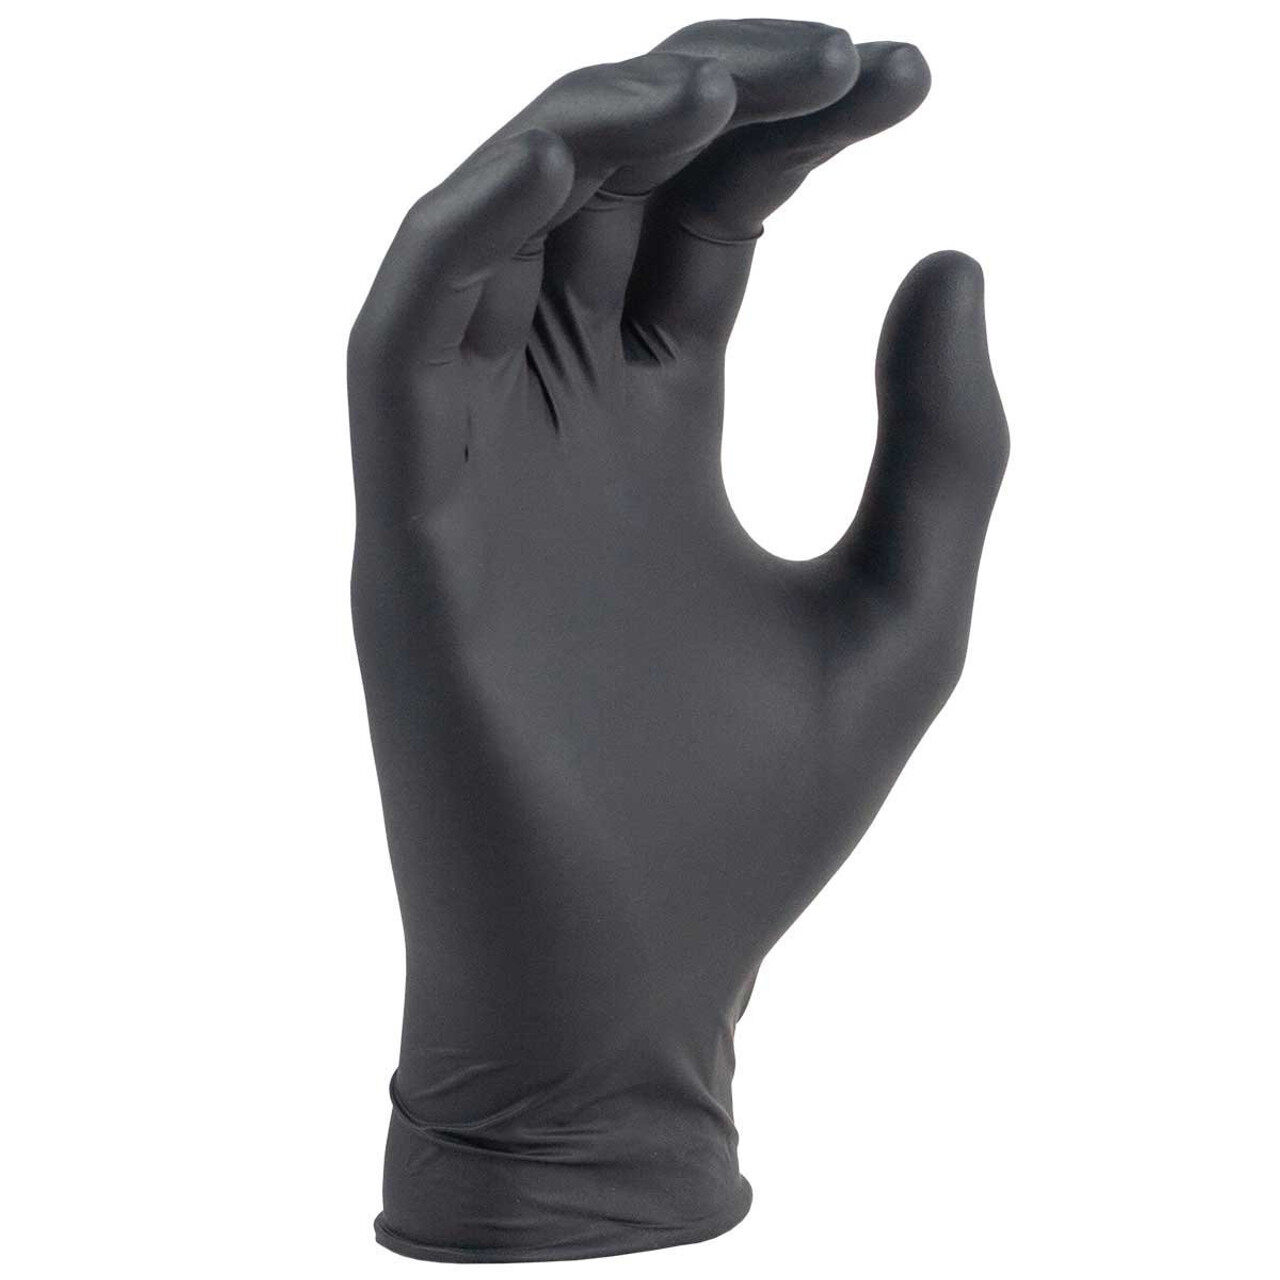 Schwarze Nitril BBQ -Handschuhe Großhandel; Kaufen Sie schwarze Nitril -BBQ -Handschuhe; Black Nitril BBQ Gloves Bluk; Black Nitril BBQ Gloves Lieferant; Schwarzer Nitril BBQ -Handschuhe Preis